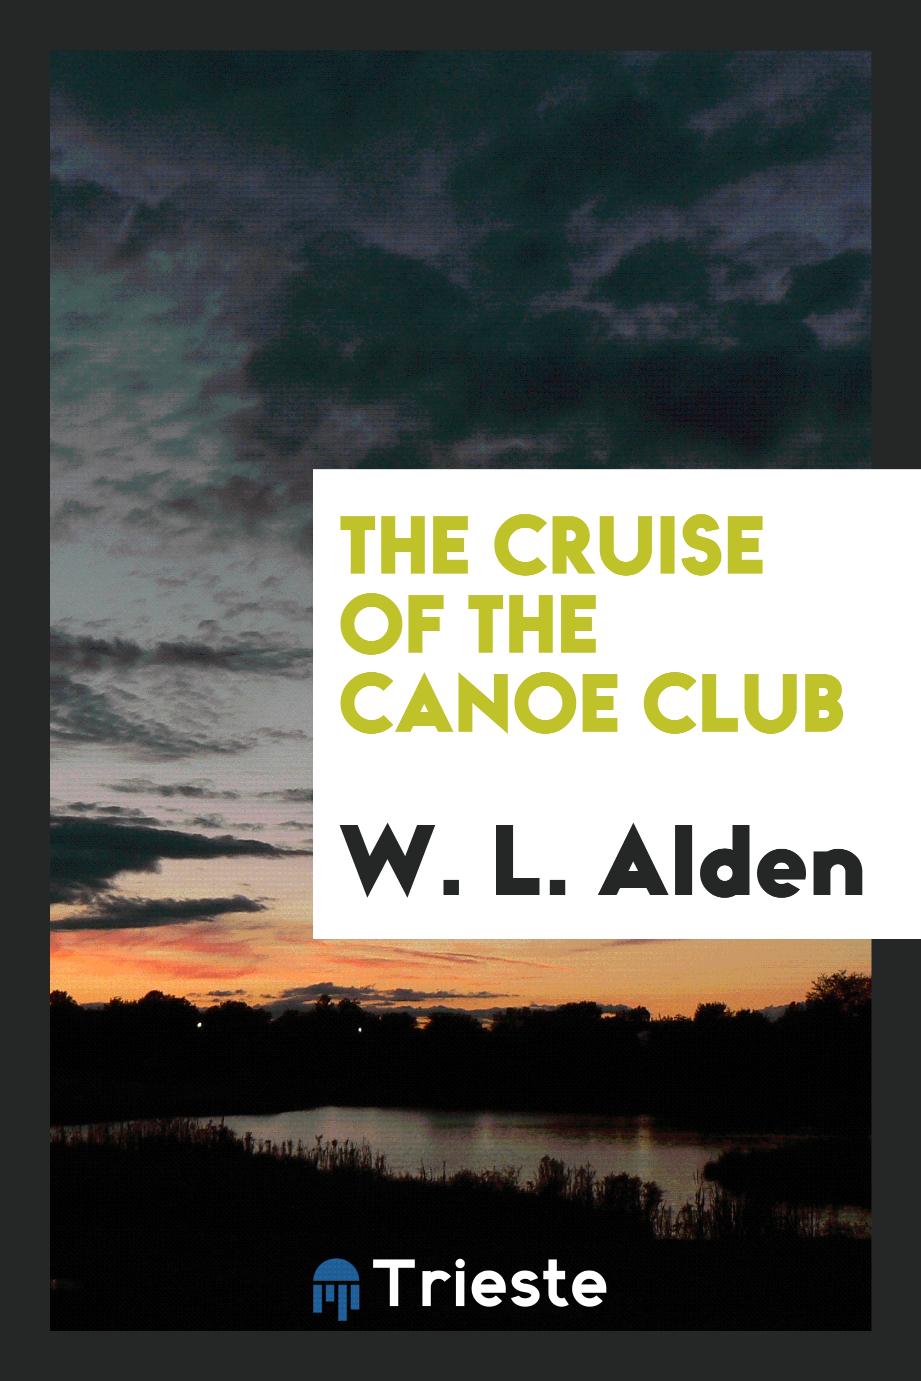 The cruise of the Canoe club